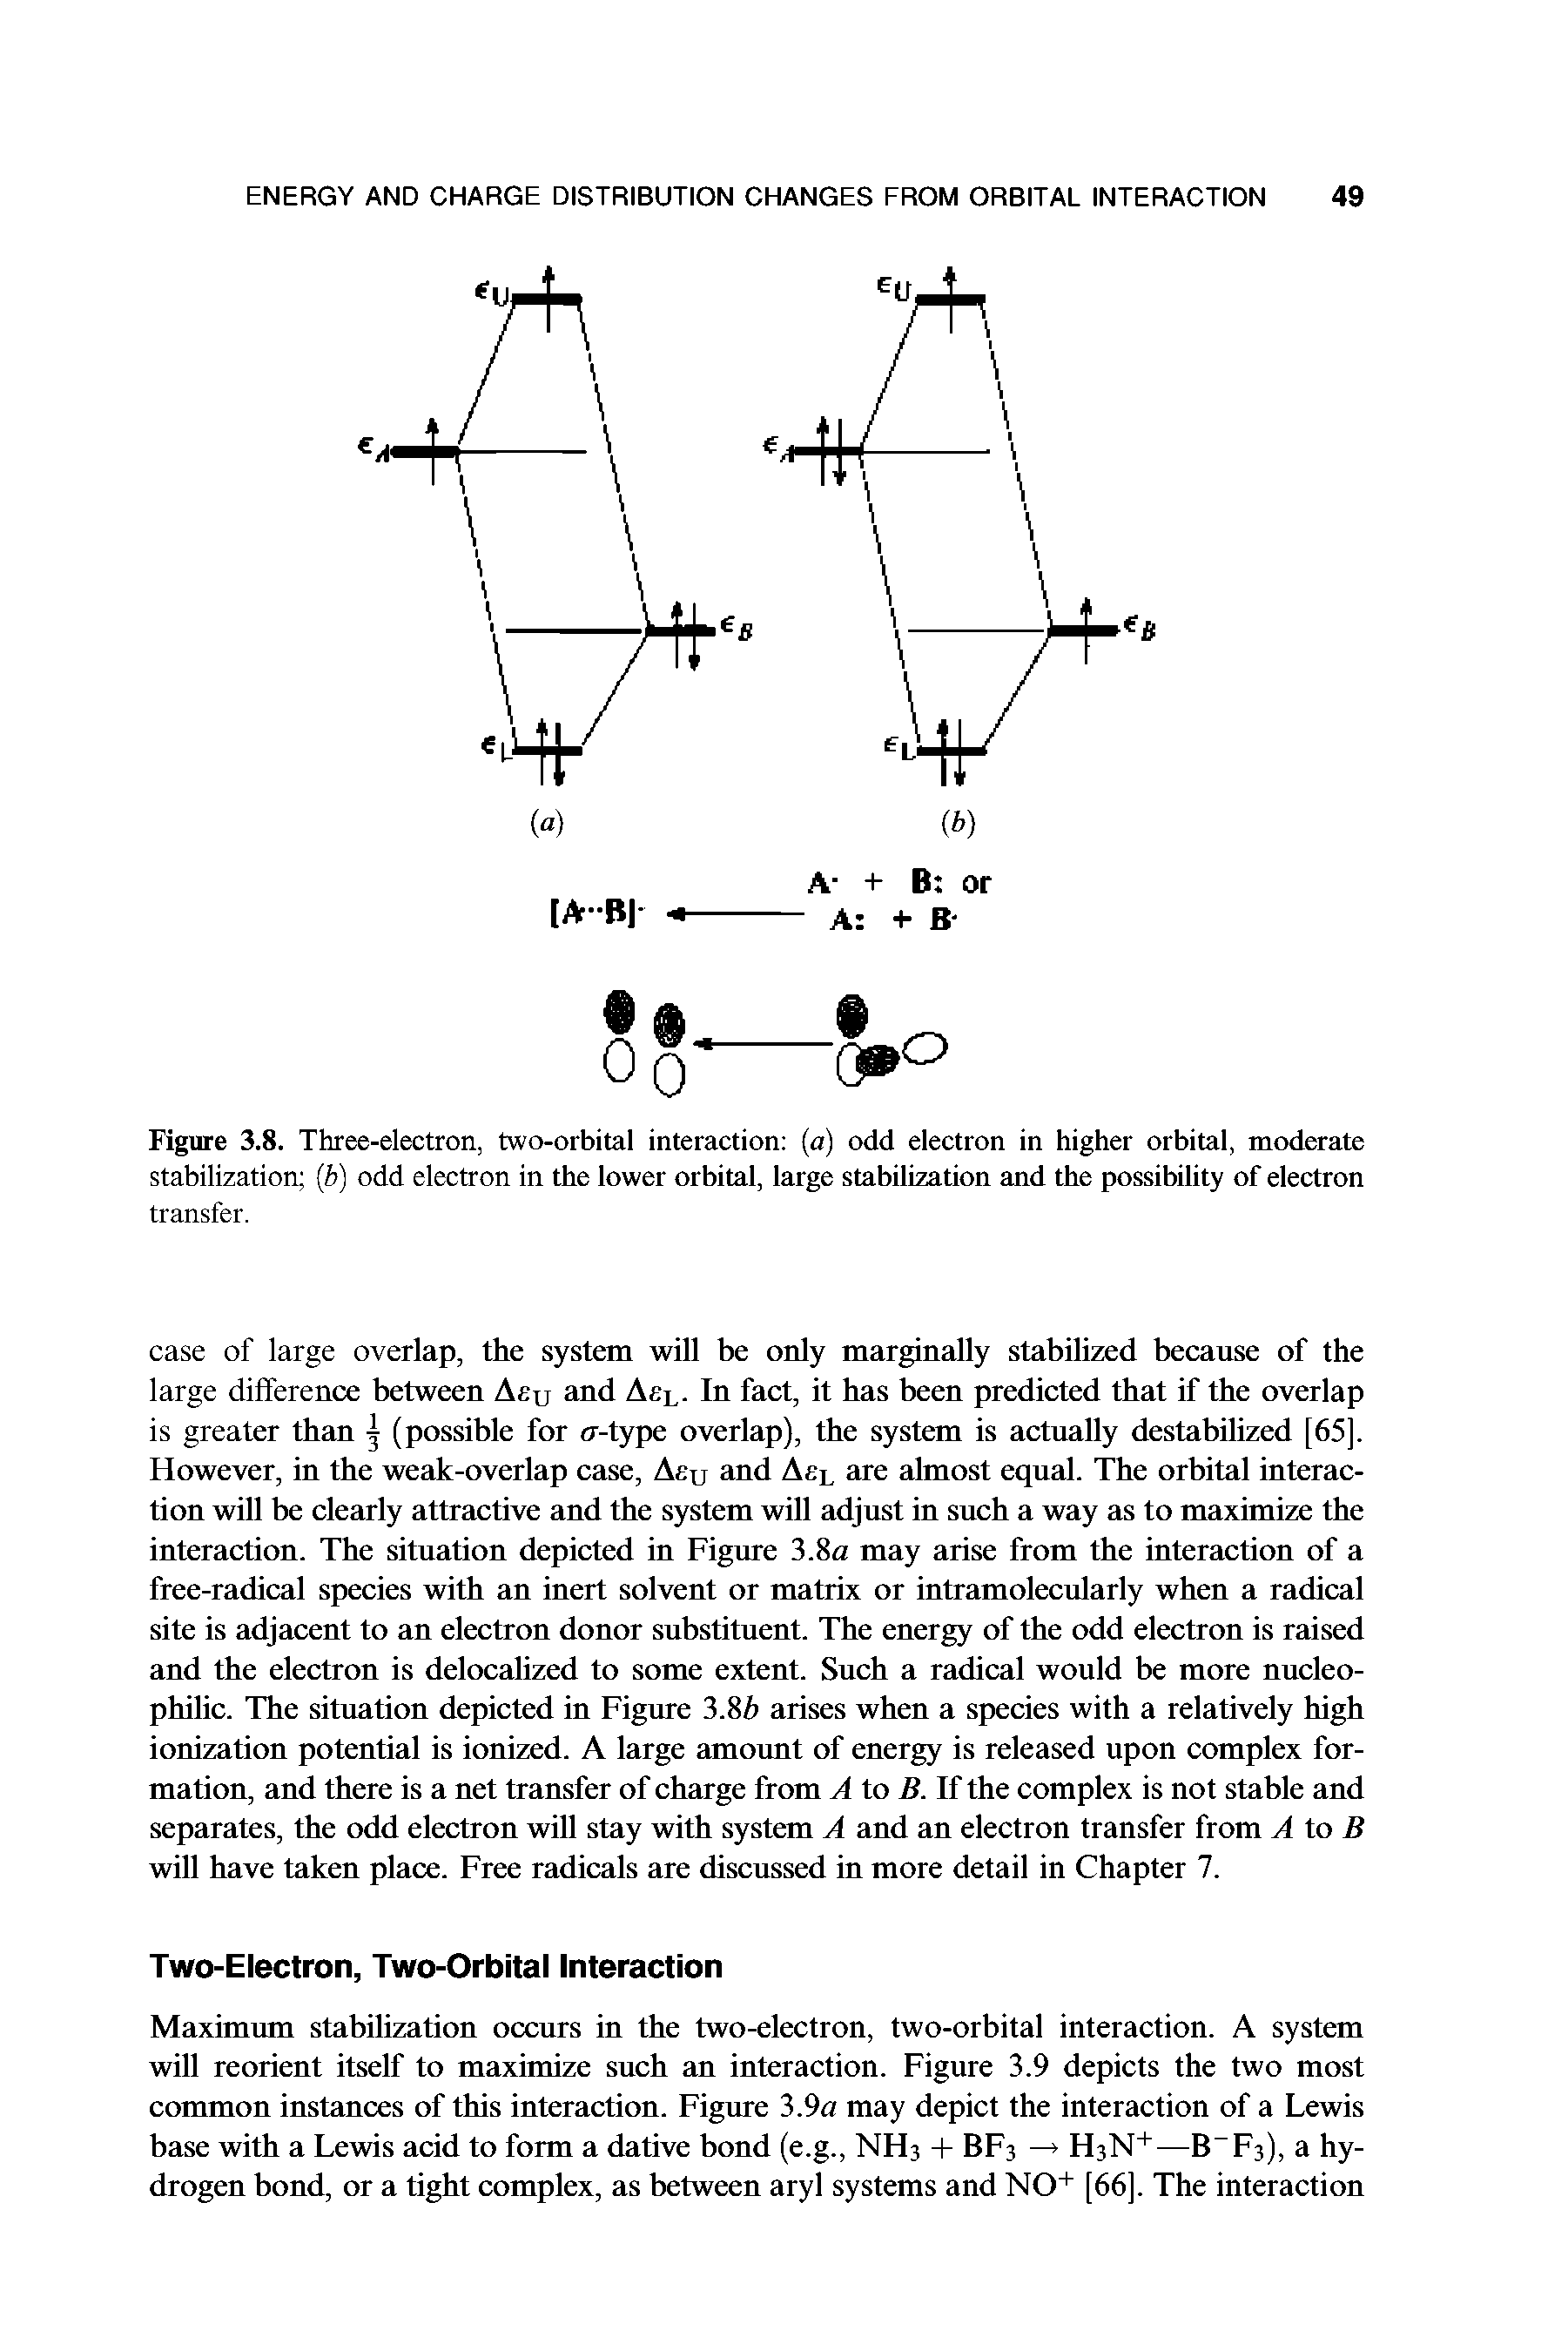 Figure 3.8. Three-electron, two-orbital interaction (a) odd electron in higher orbital, moderate stabilization (b) odd electron in the lower orbital, large stabilization and the possibility of electron...